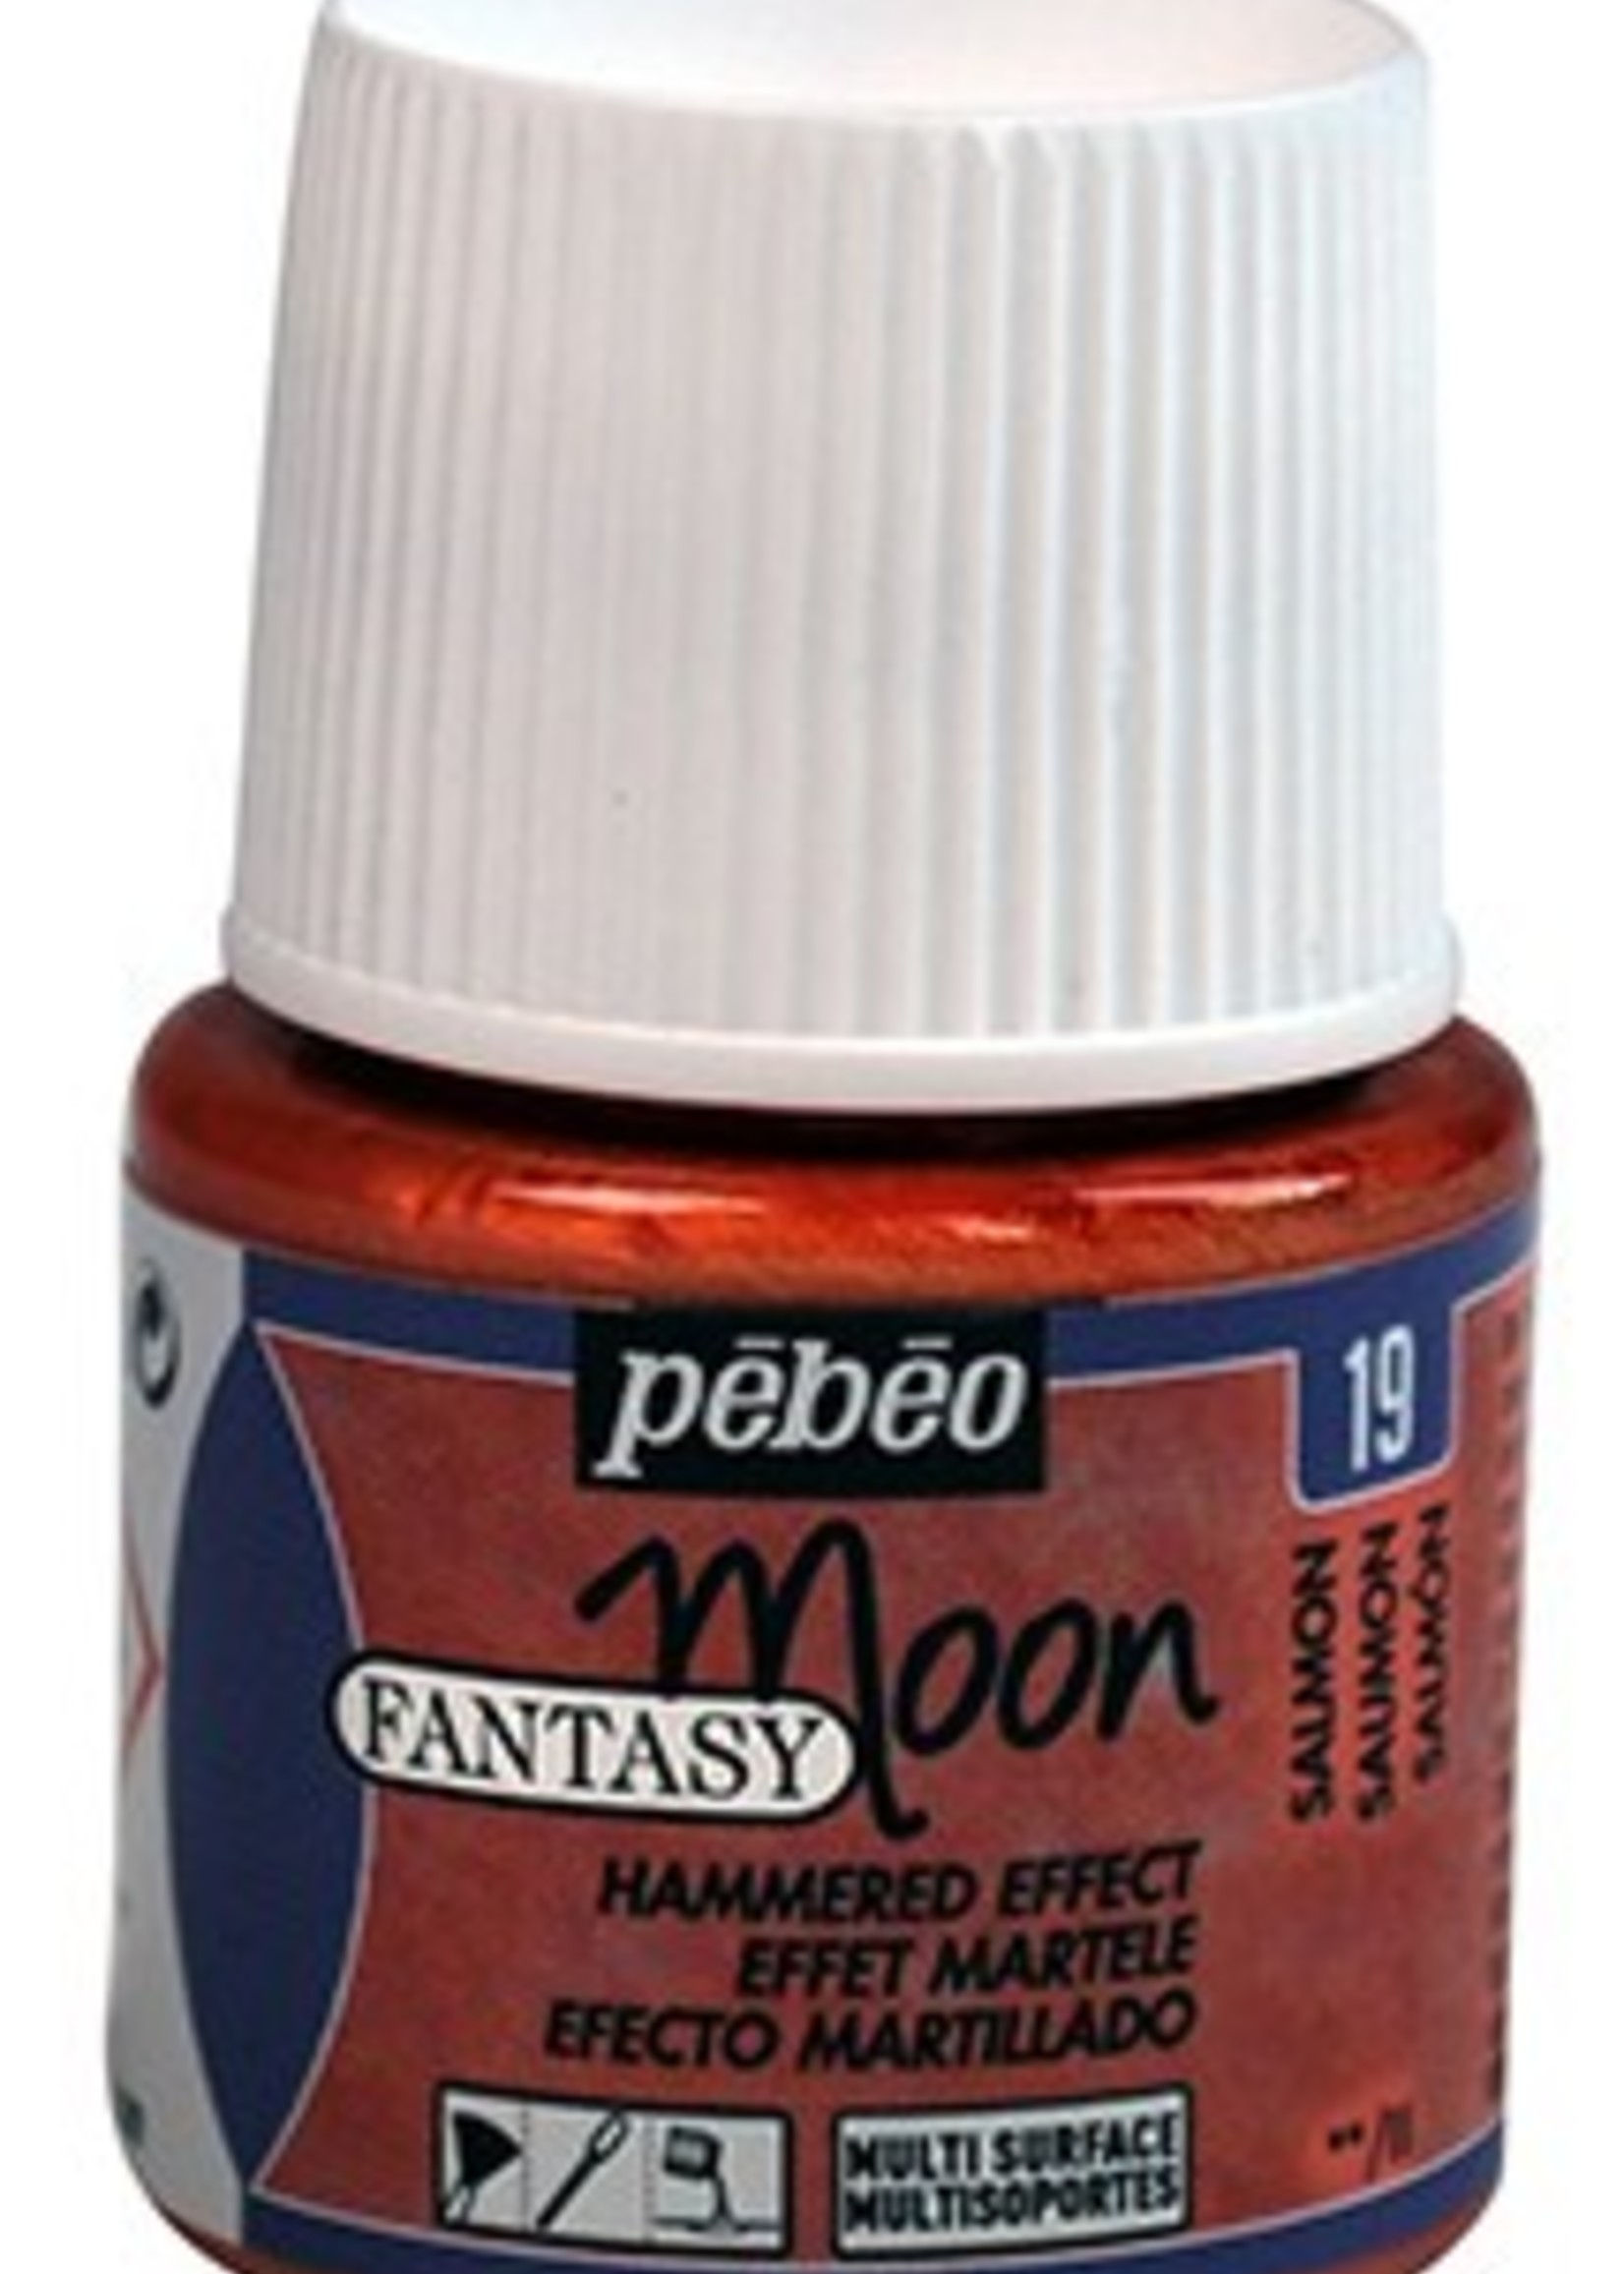 PEBEO PEBEO FANTASY MOON SALMON 19 45ML